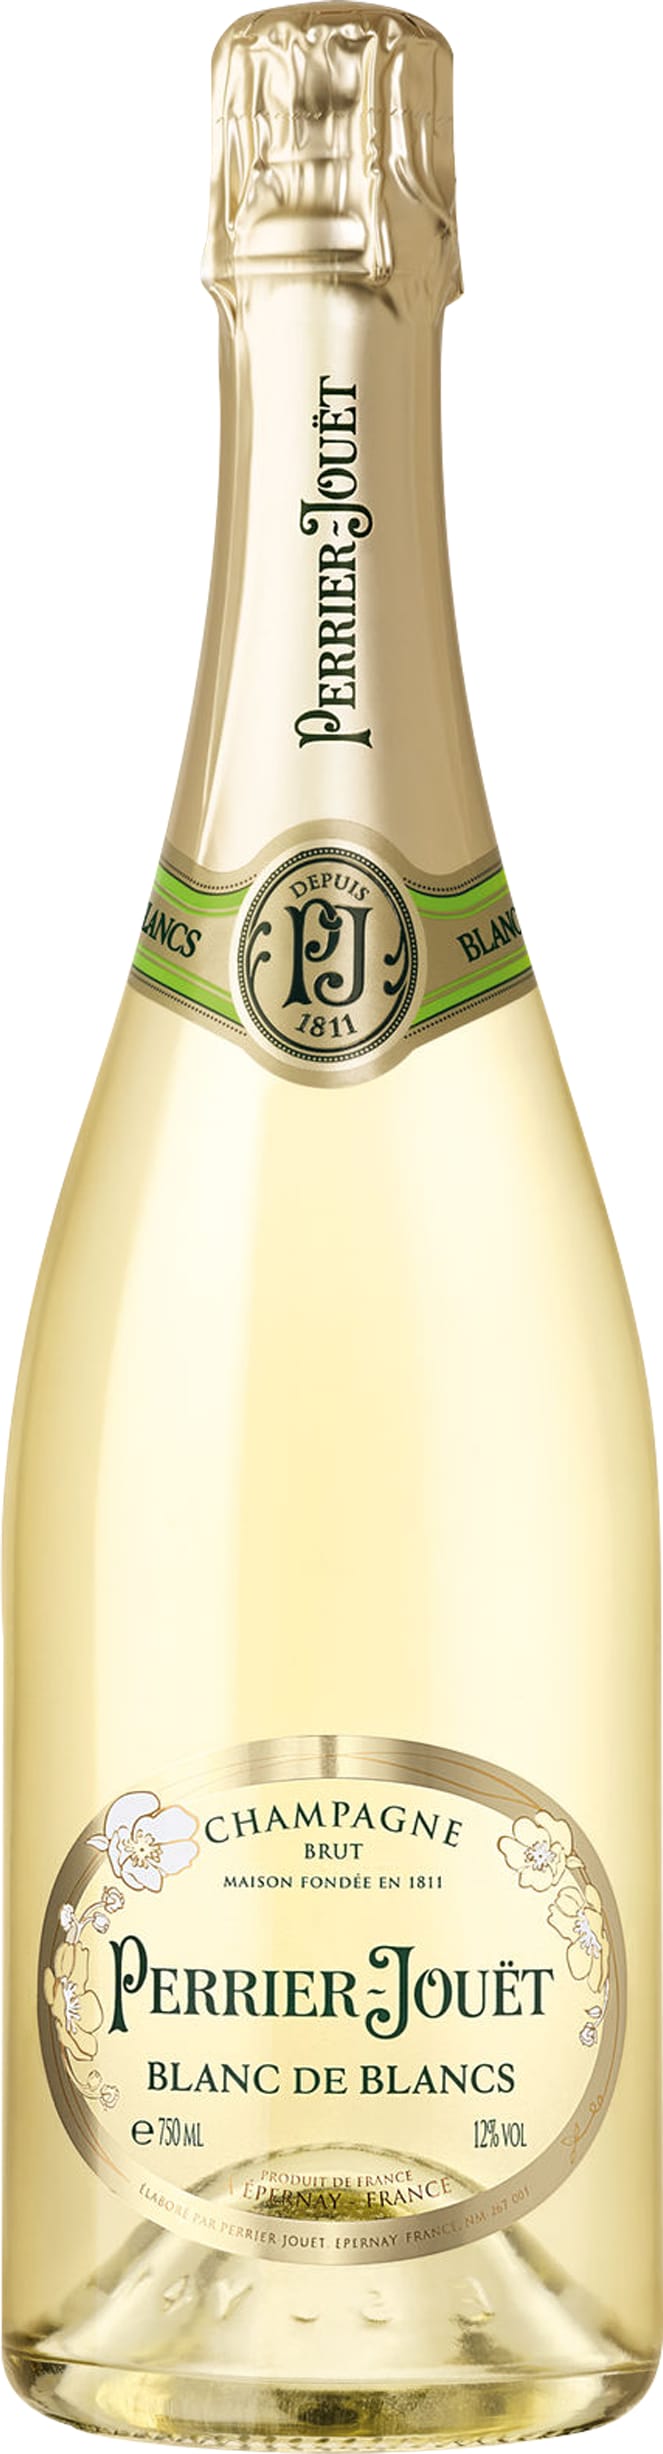 Blanc de Blancs NV Perrier Jouet 75cl NV - Buy Perrier-Jouet Wines from GREAT WINES DIRECT wine shop